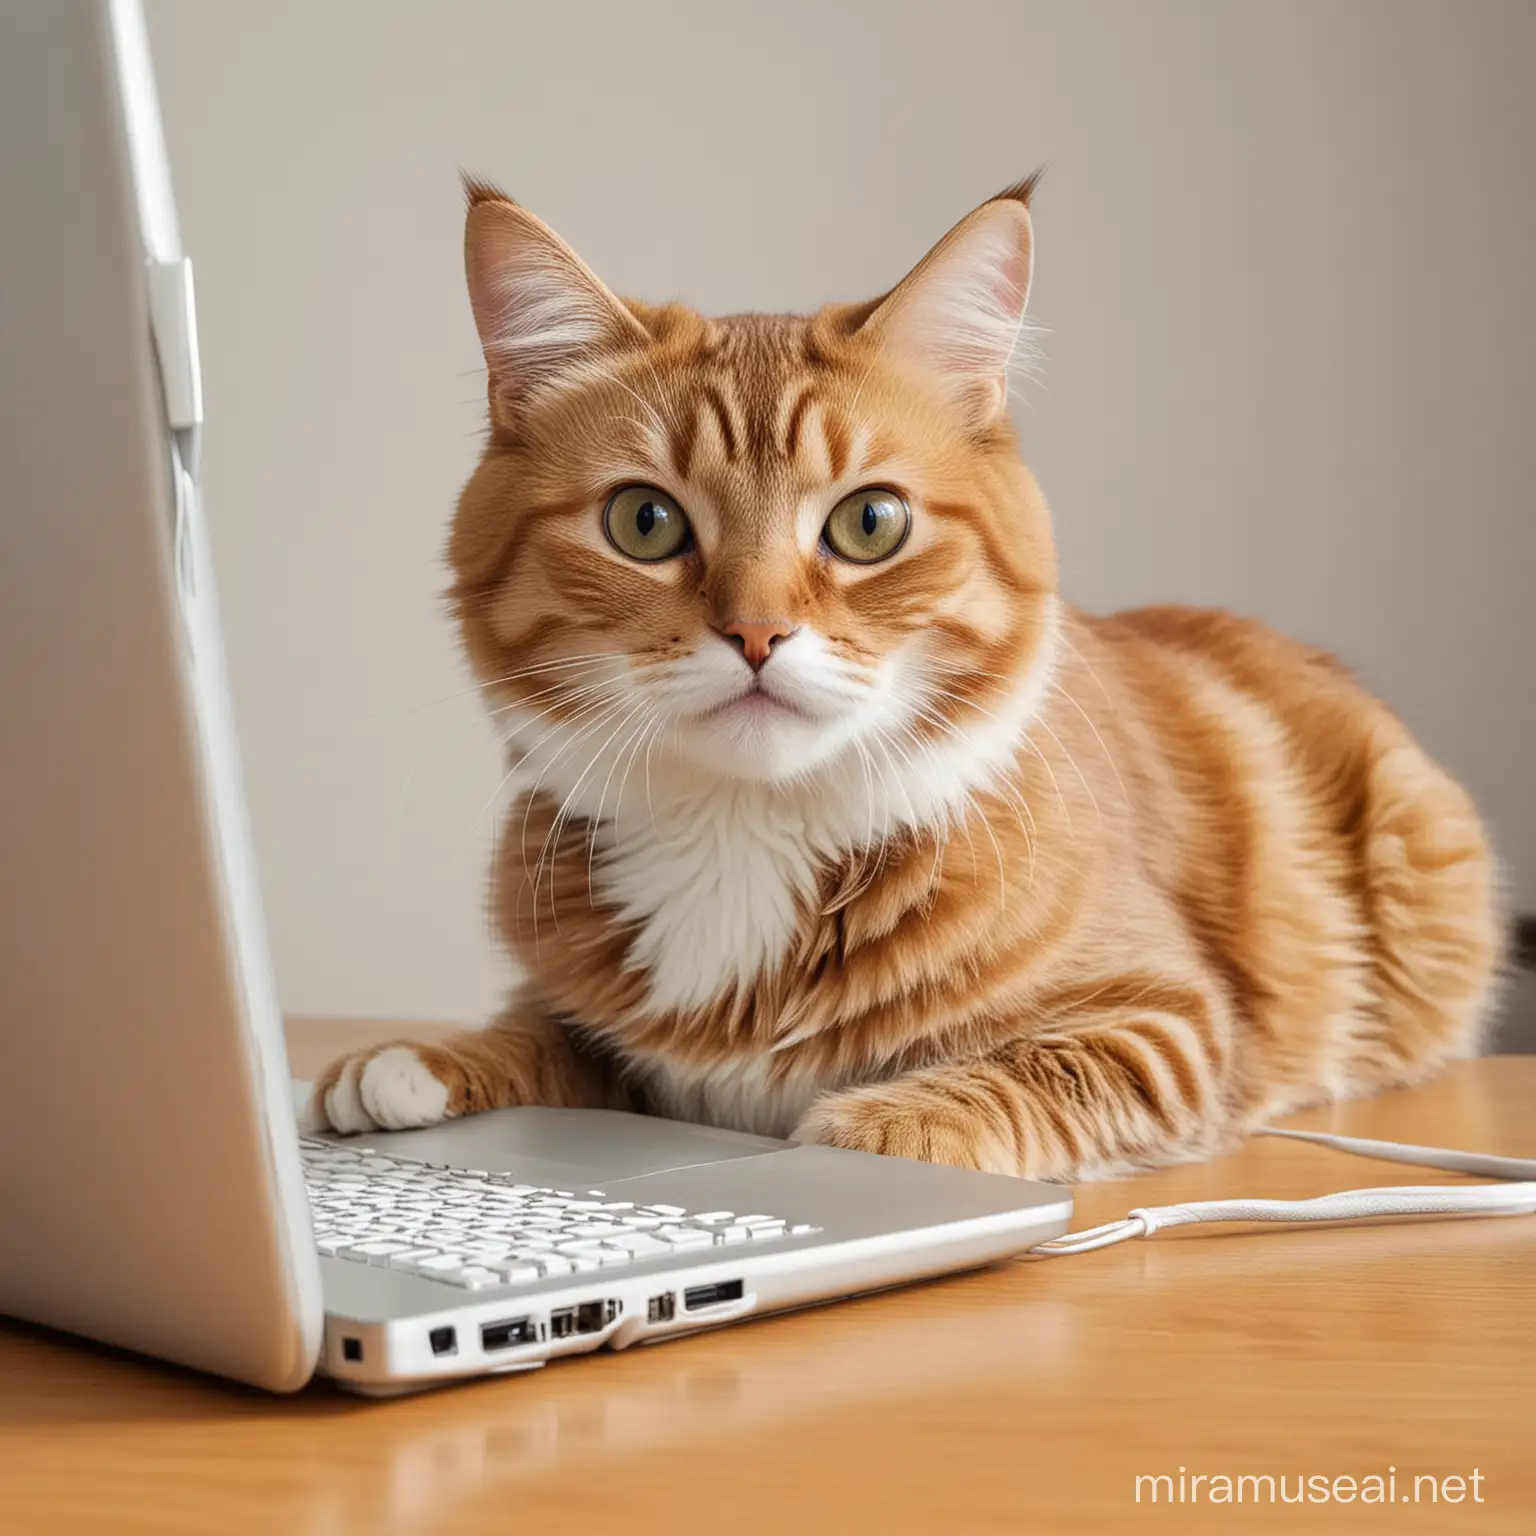 Humorous Cat Working on Computer Desk